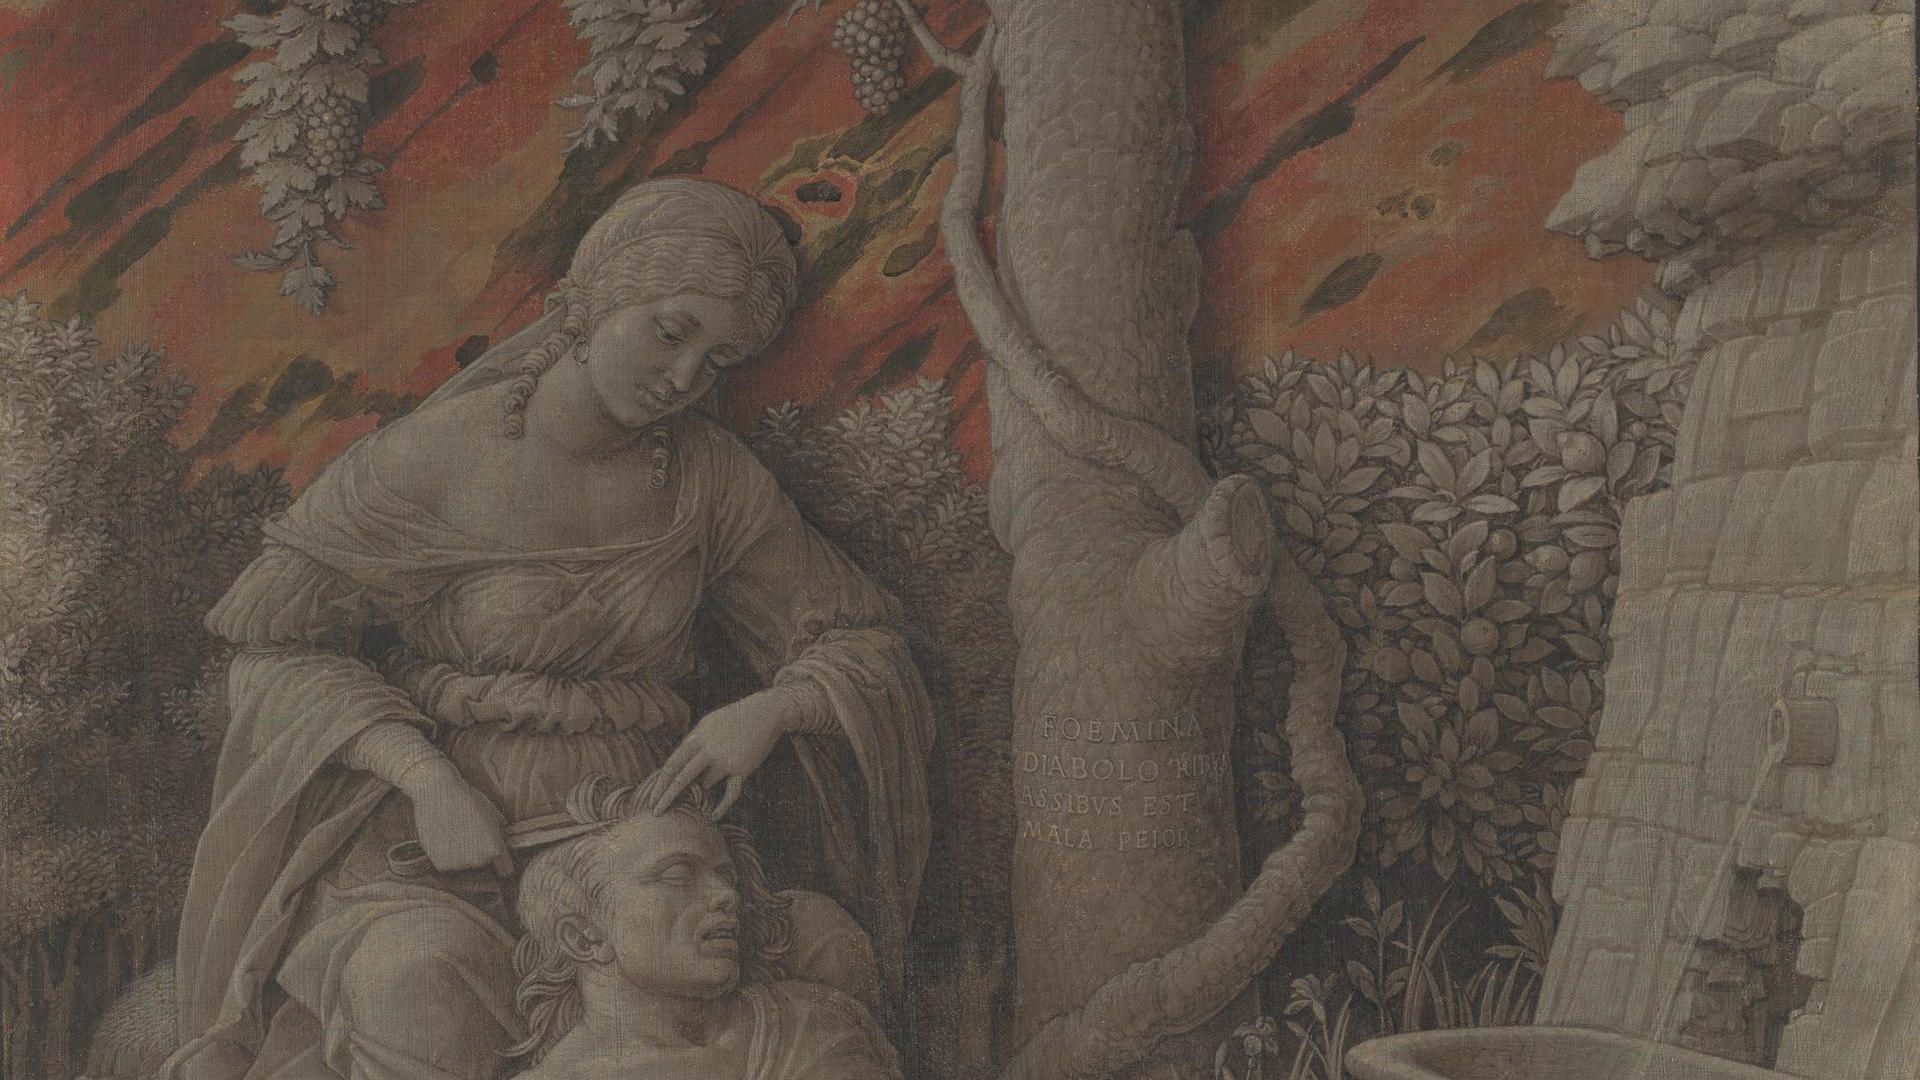 Samson and Delilah by Andrea Mantegna